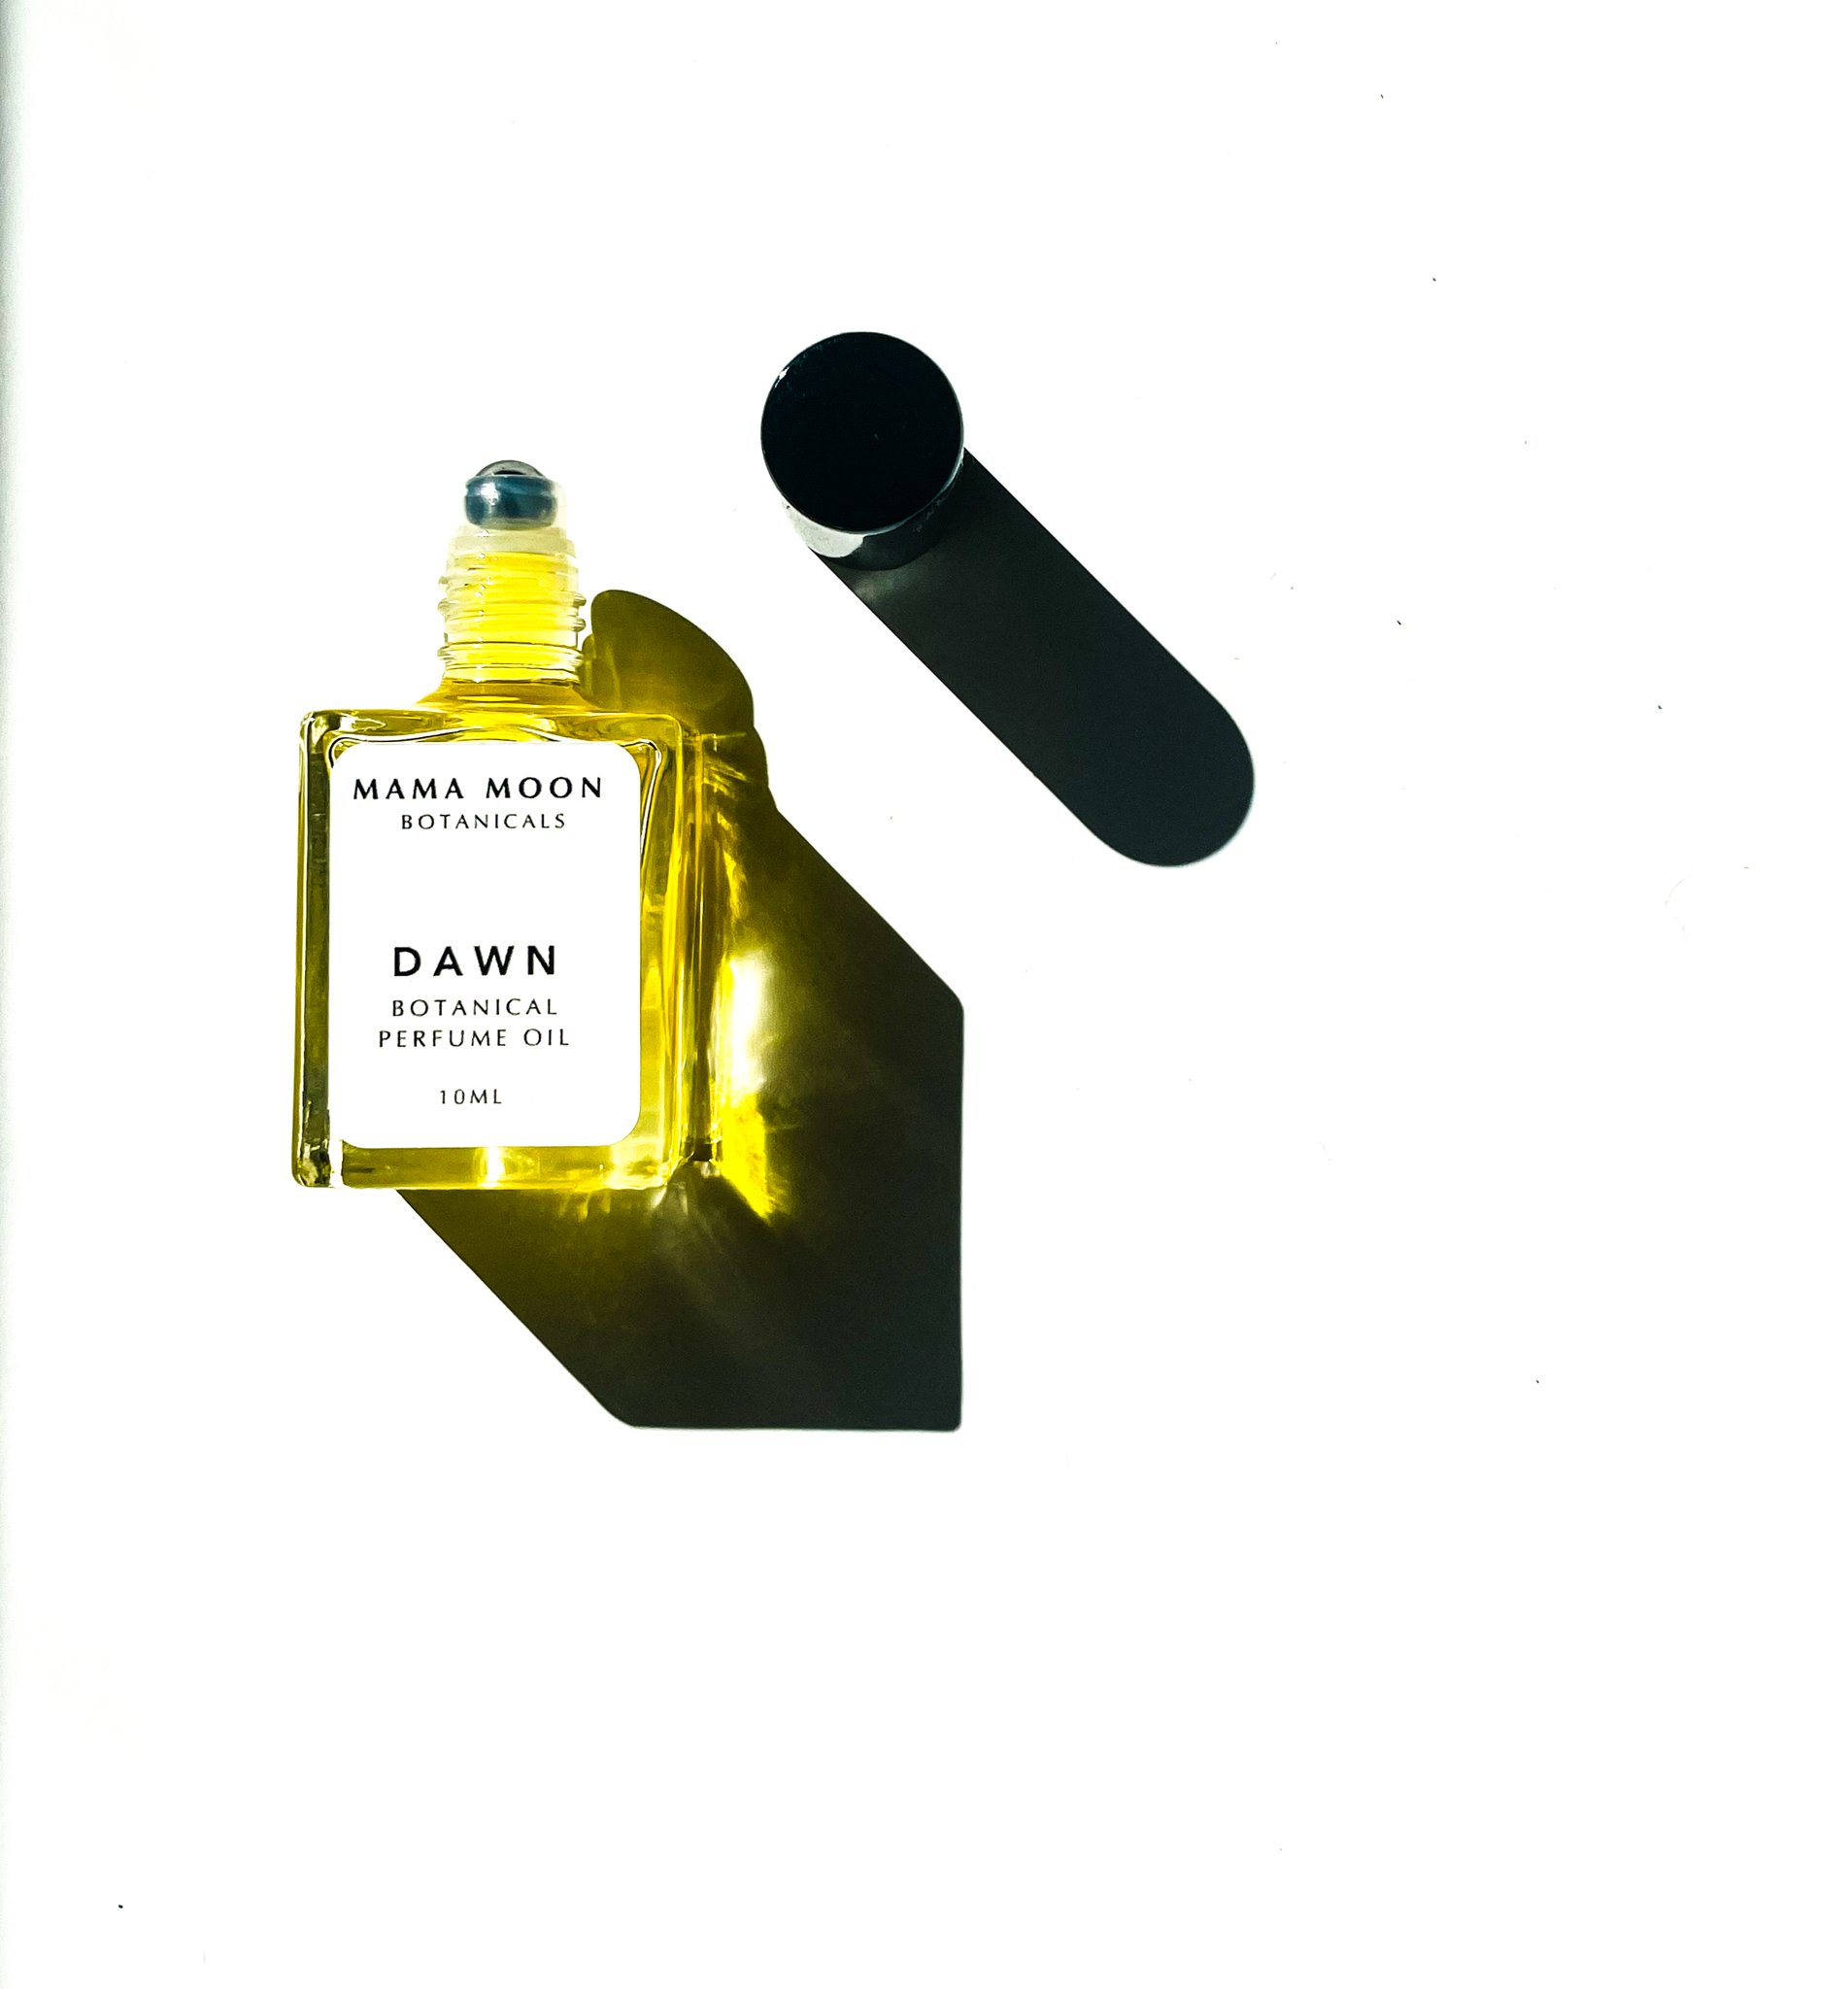 dawn-botanical-perfume-oil-16.jpg